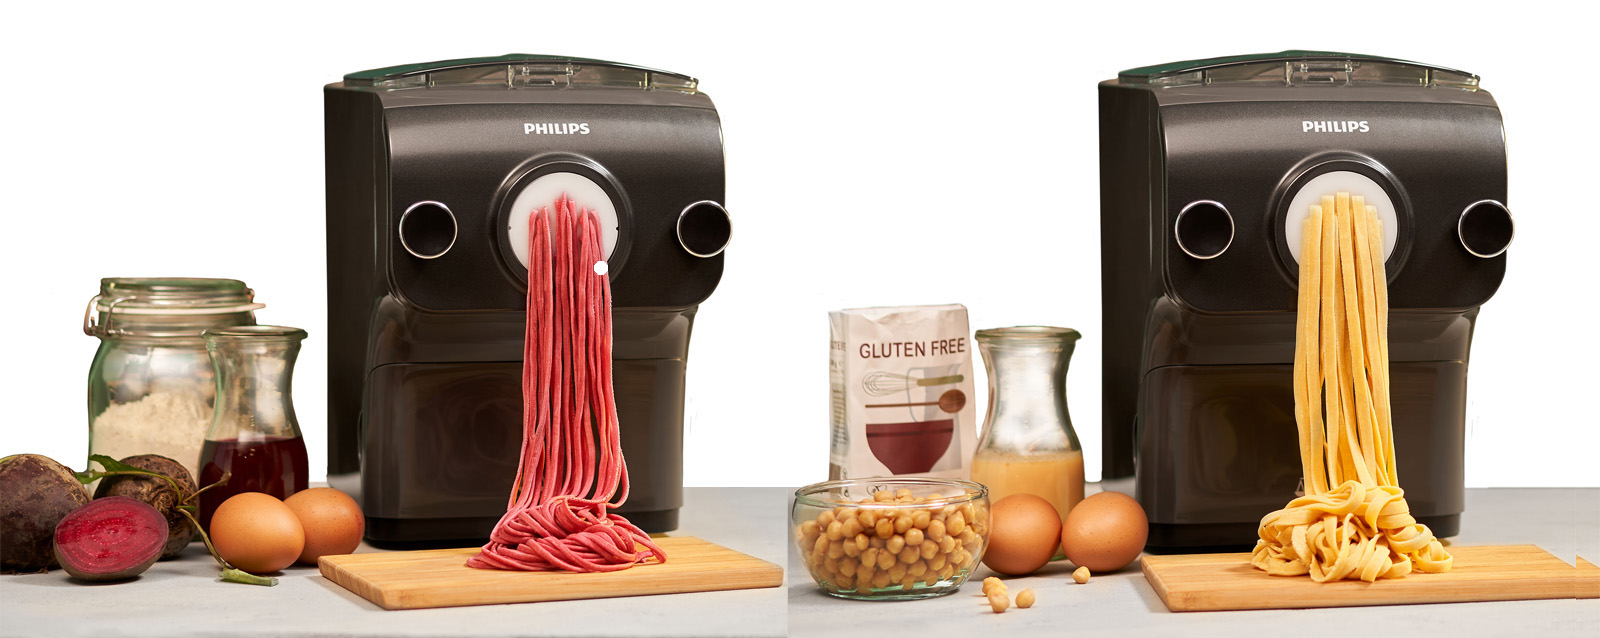 Philips Pasta & Noodle Maker Review + Recipes